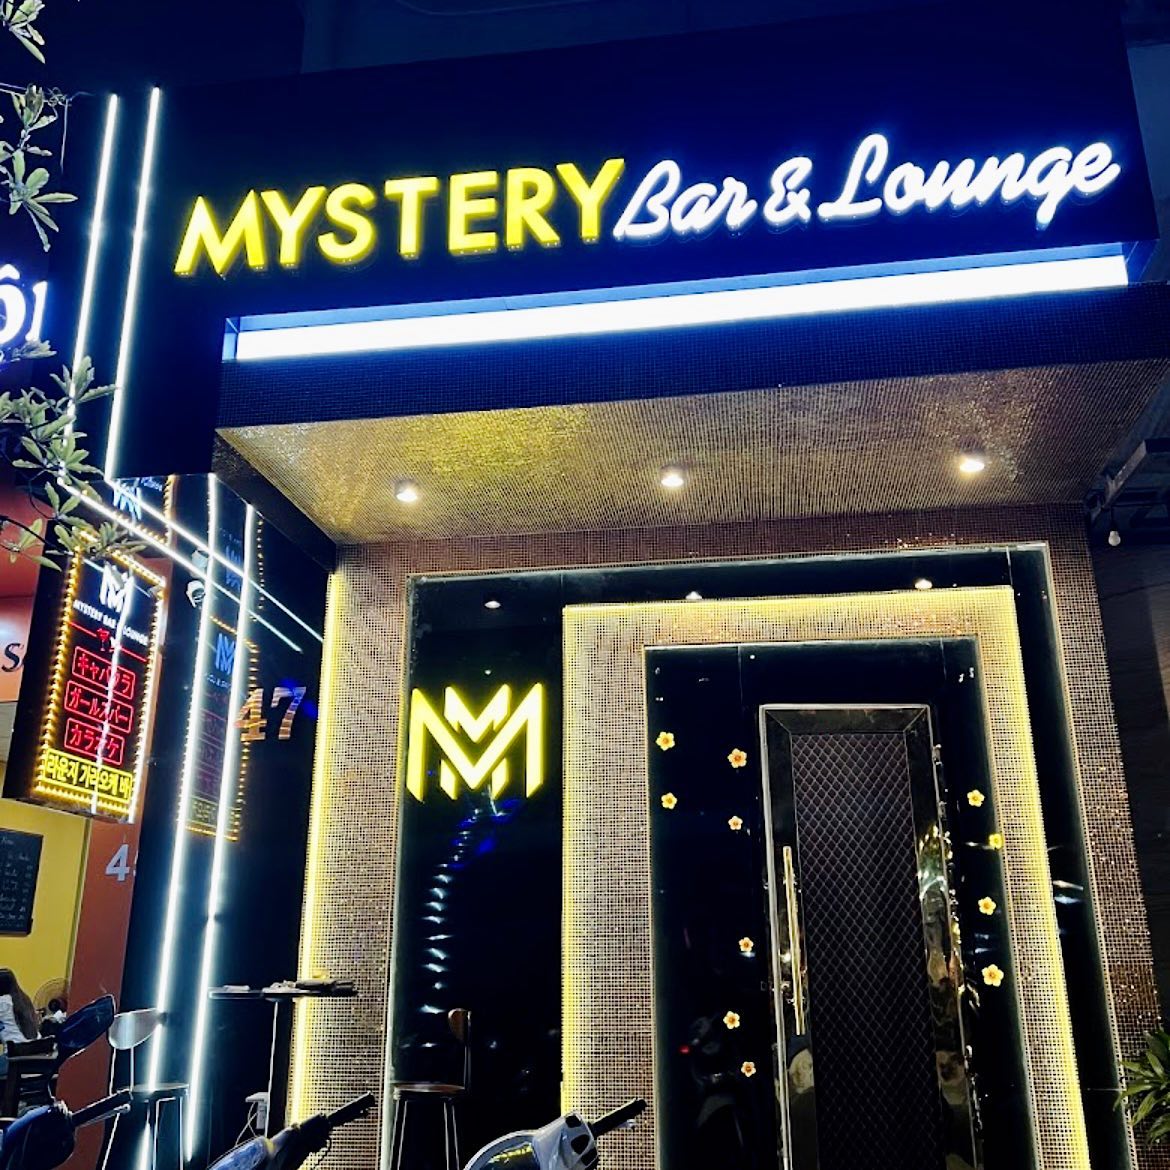 Mystery bar & lounge 